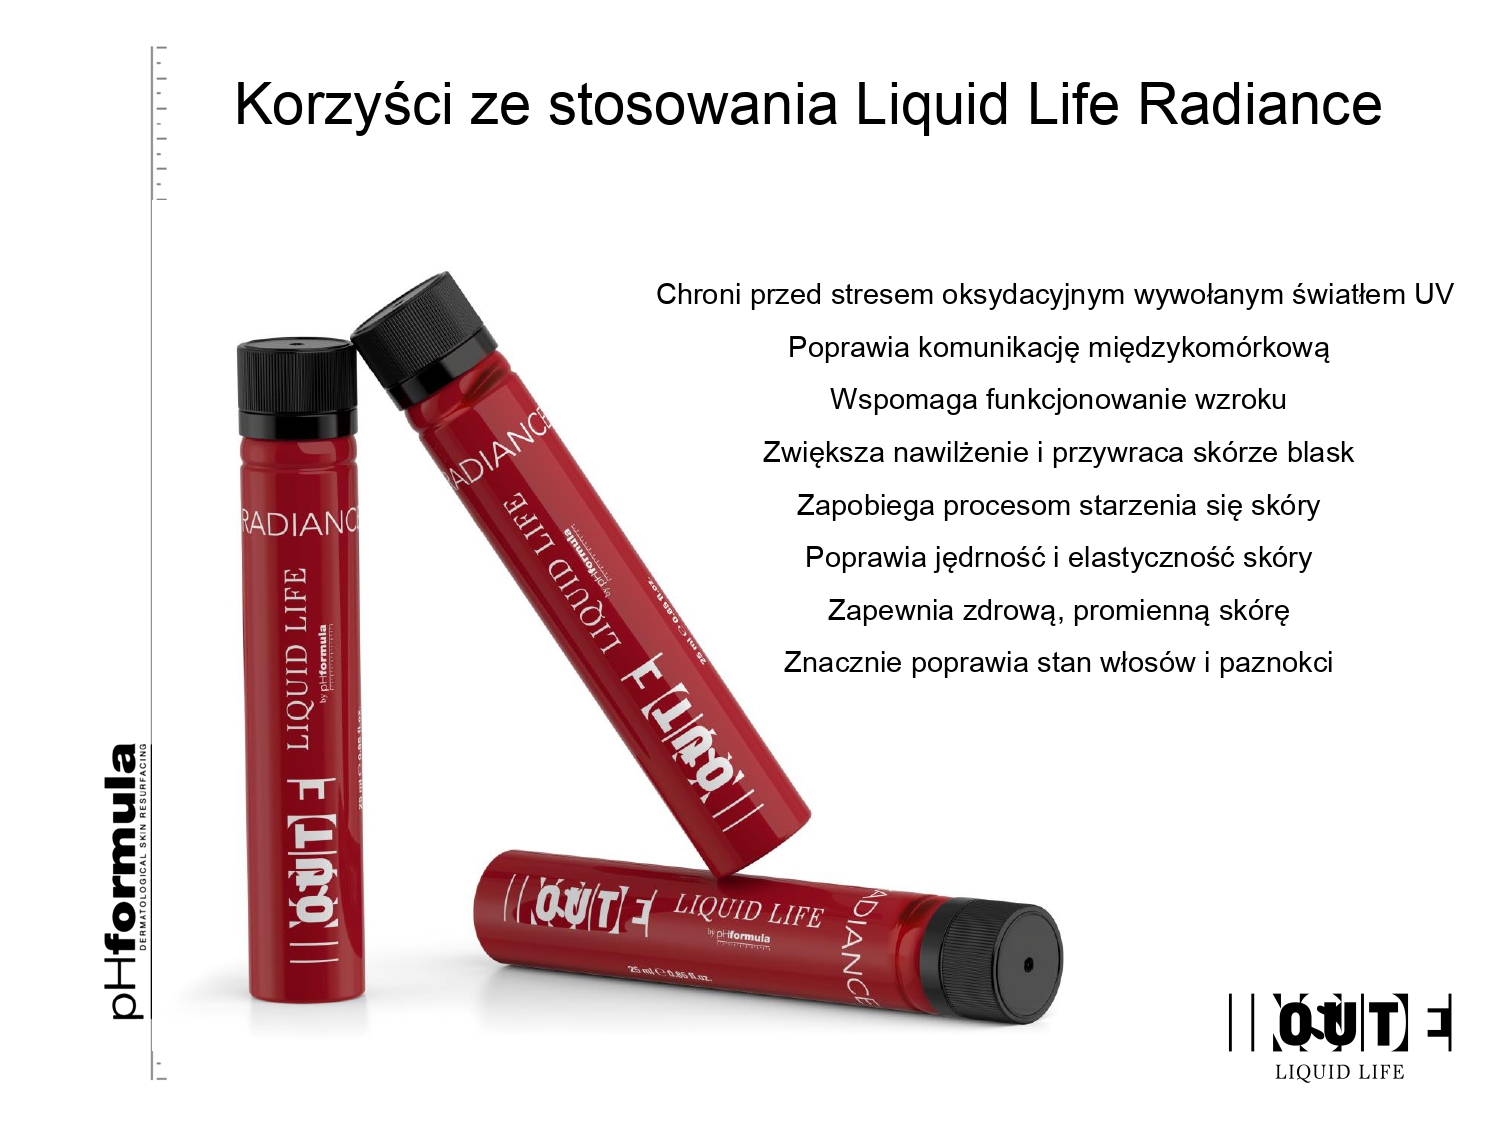 Liquid Life Radiance + slajdy po polsku (1) (2)_page-0005